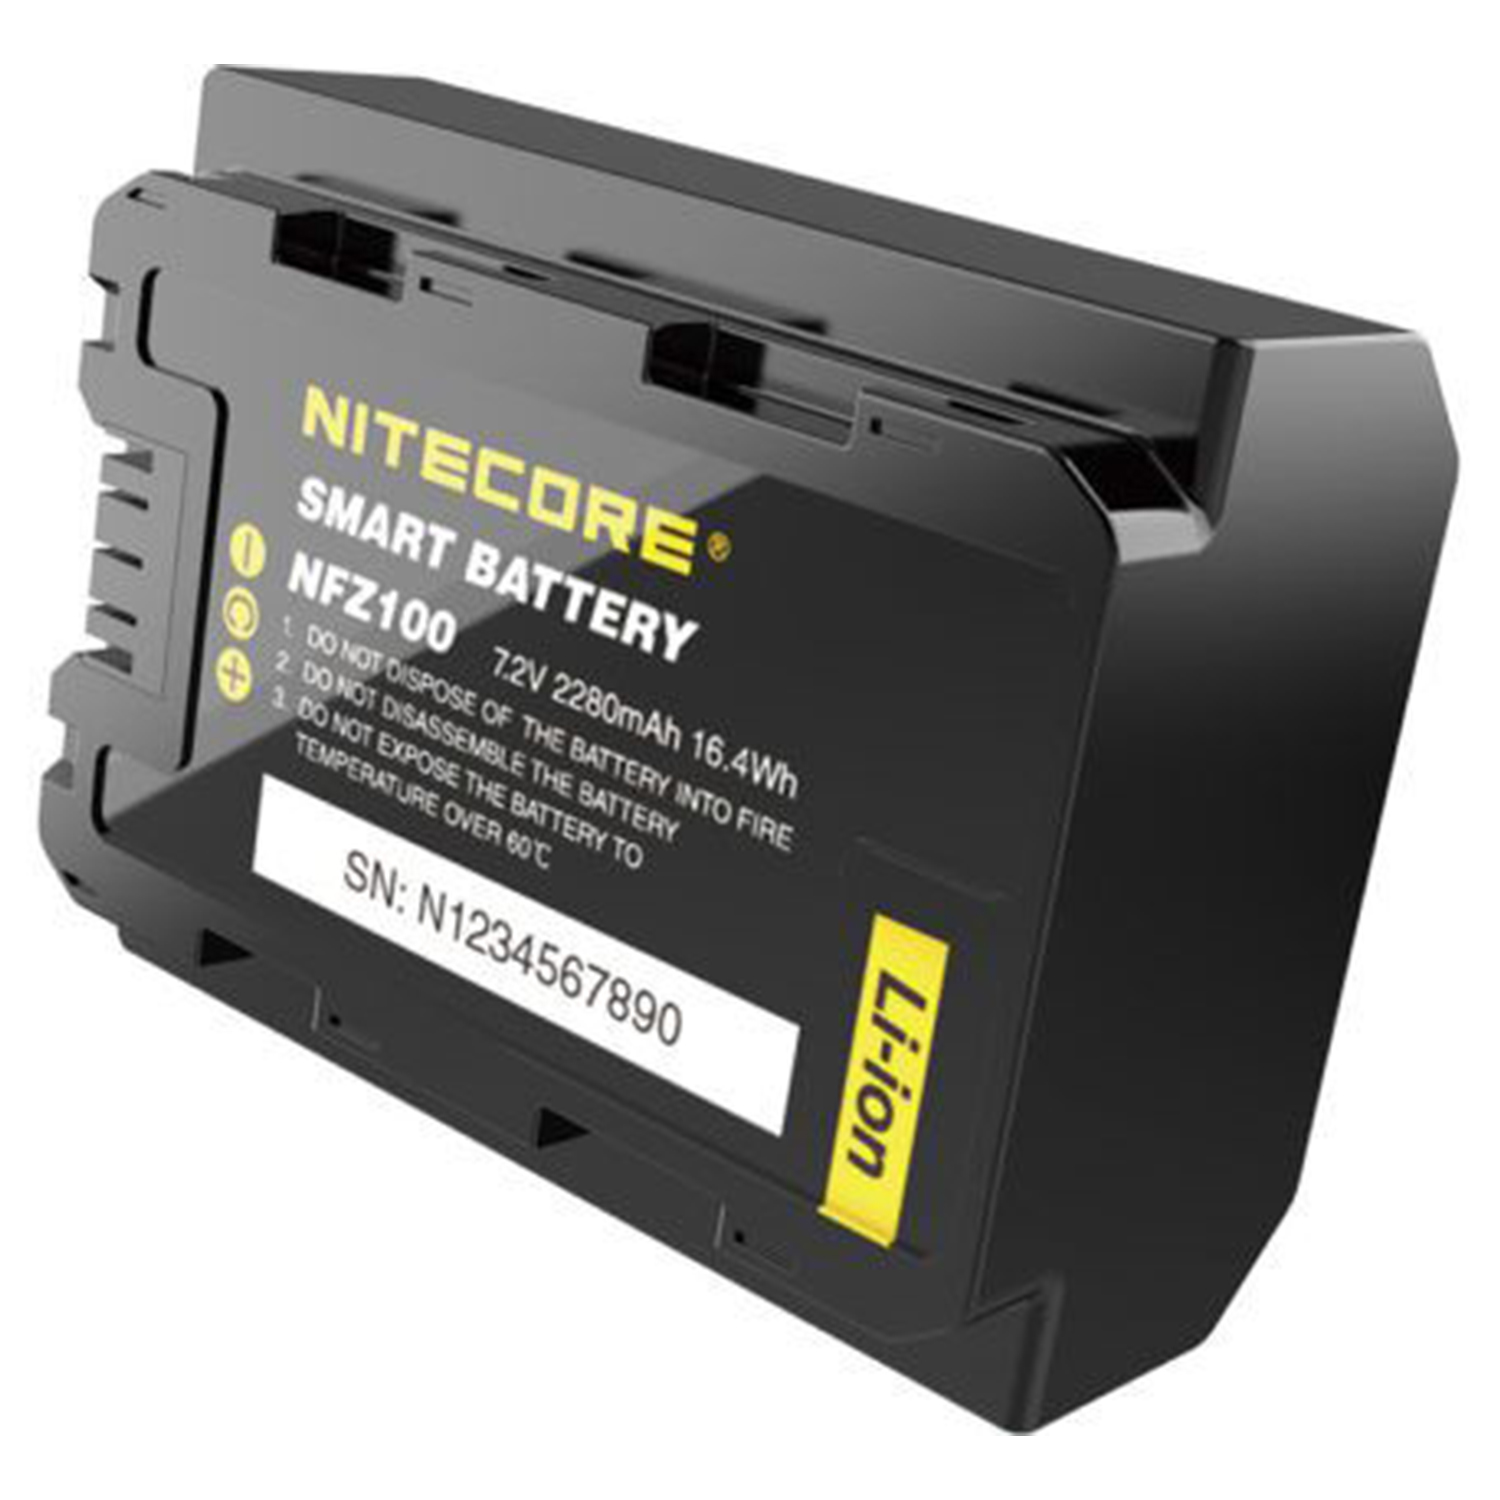 Nitecore  NFZ100 Smart Battery for Sony (NP-FZ100)